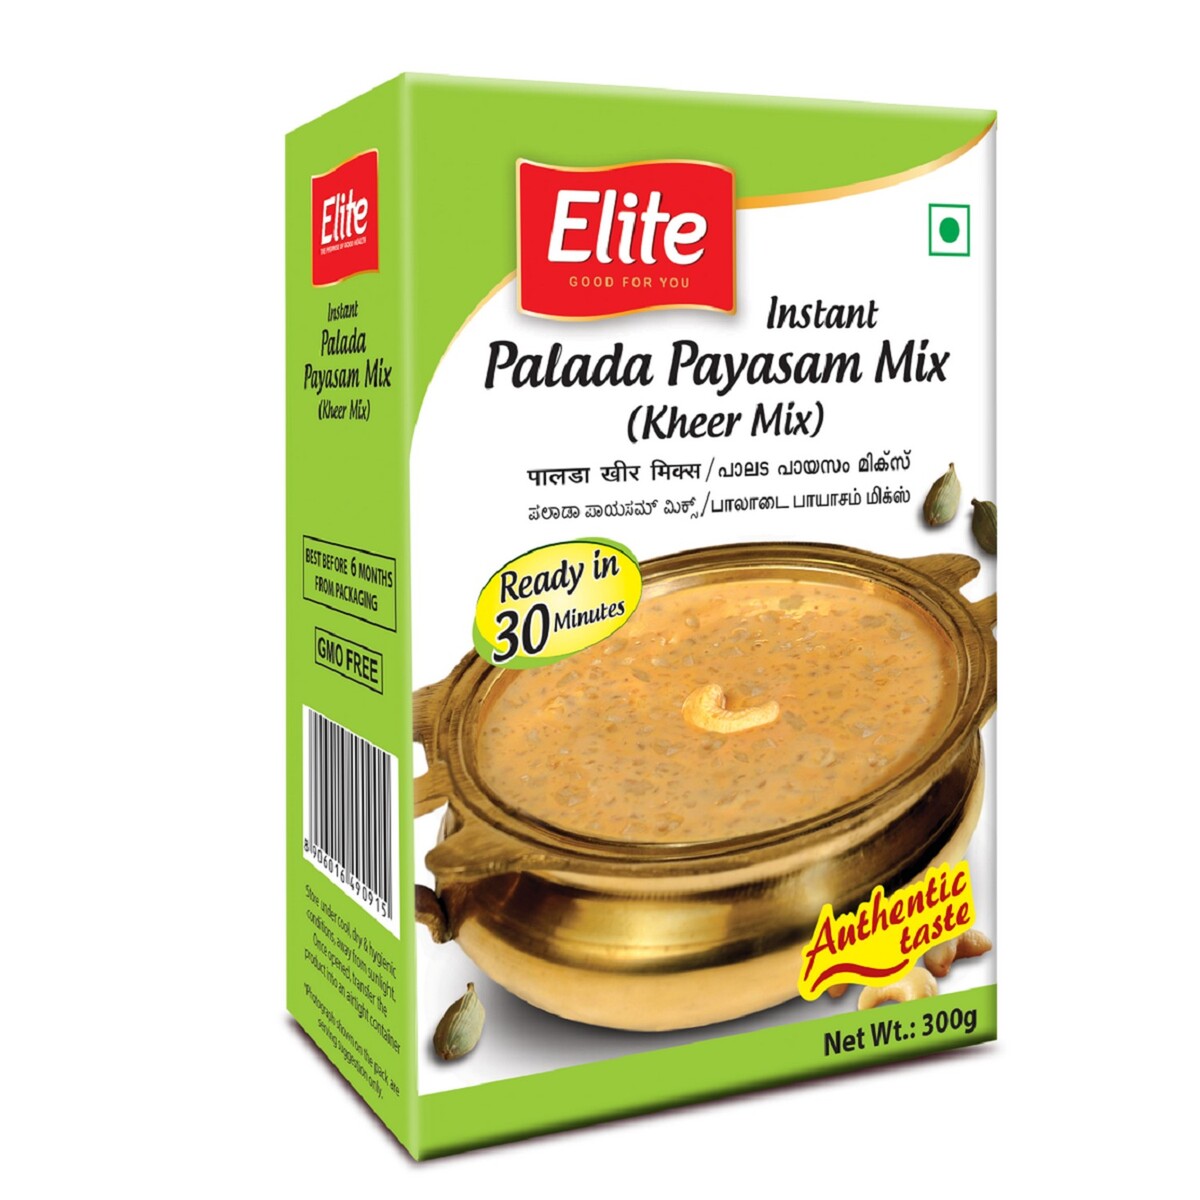 Elite Palada Payasam Mix 300g